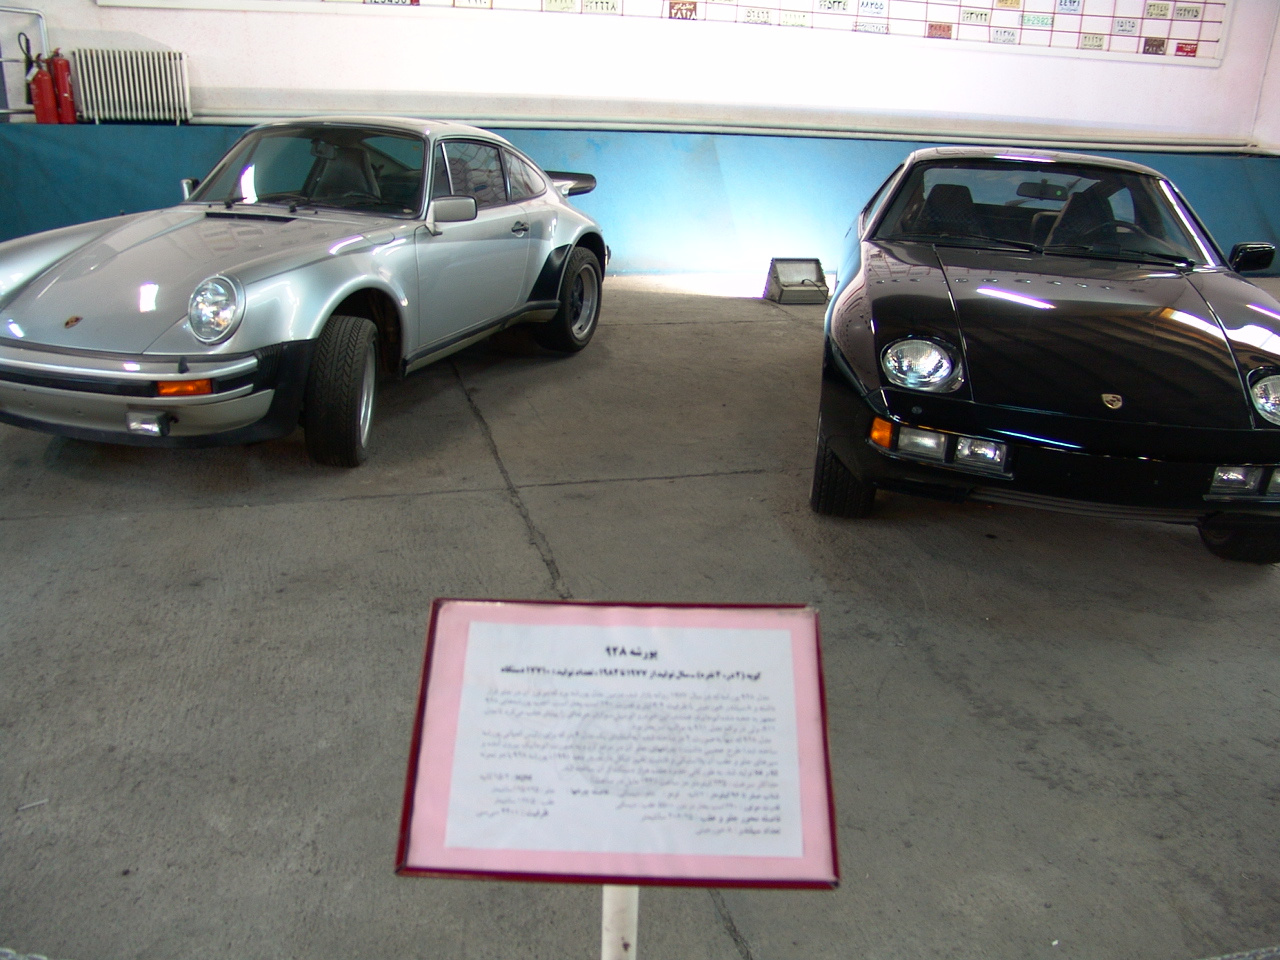 Iranian car museum, Karaj,July13,2010 337